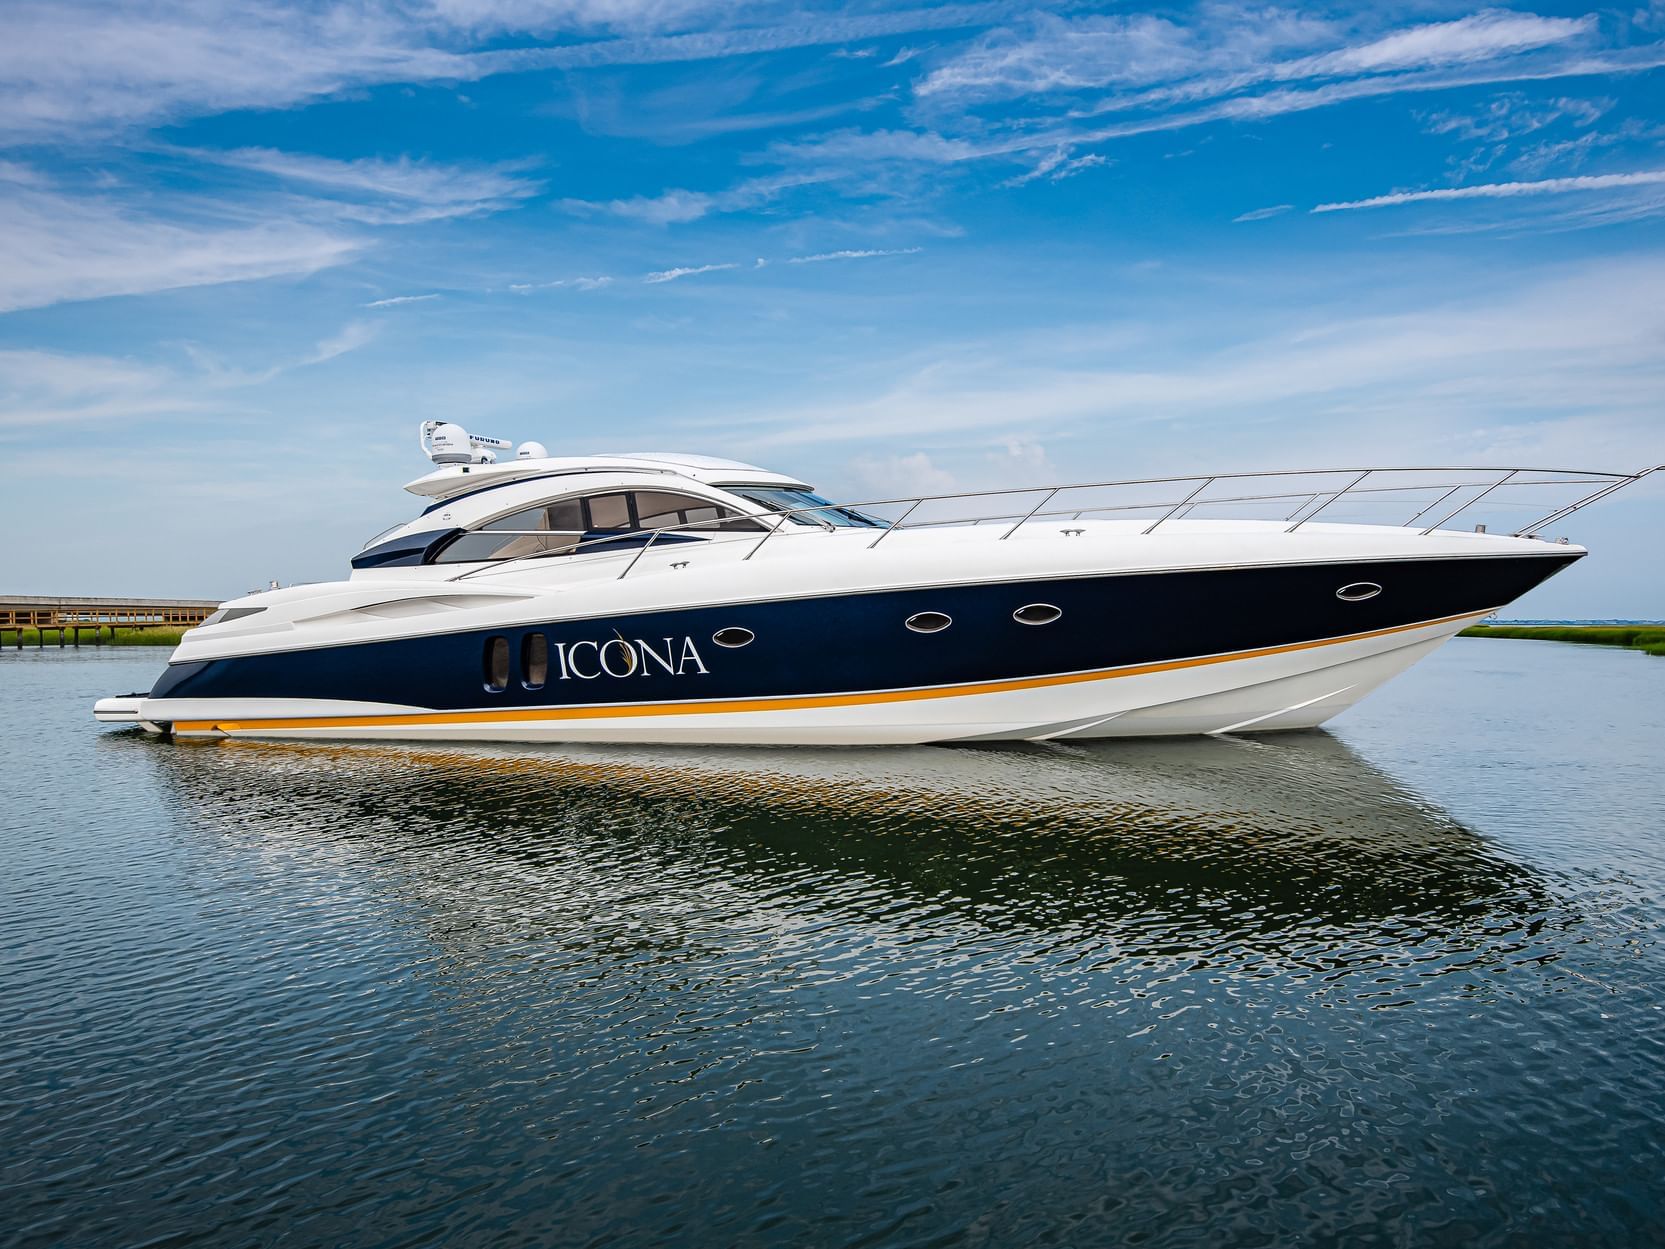 Yacht of ICONA Windrift in the sea